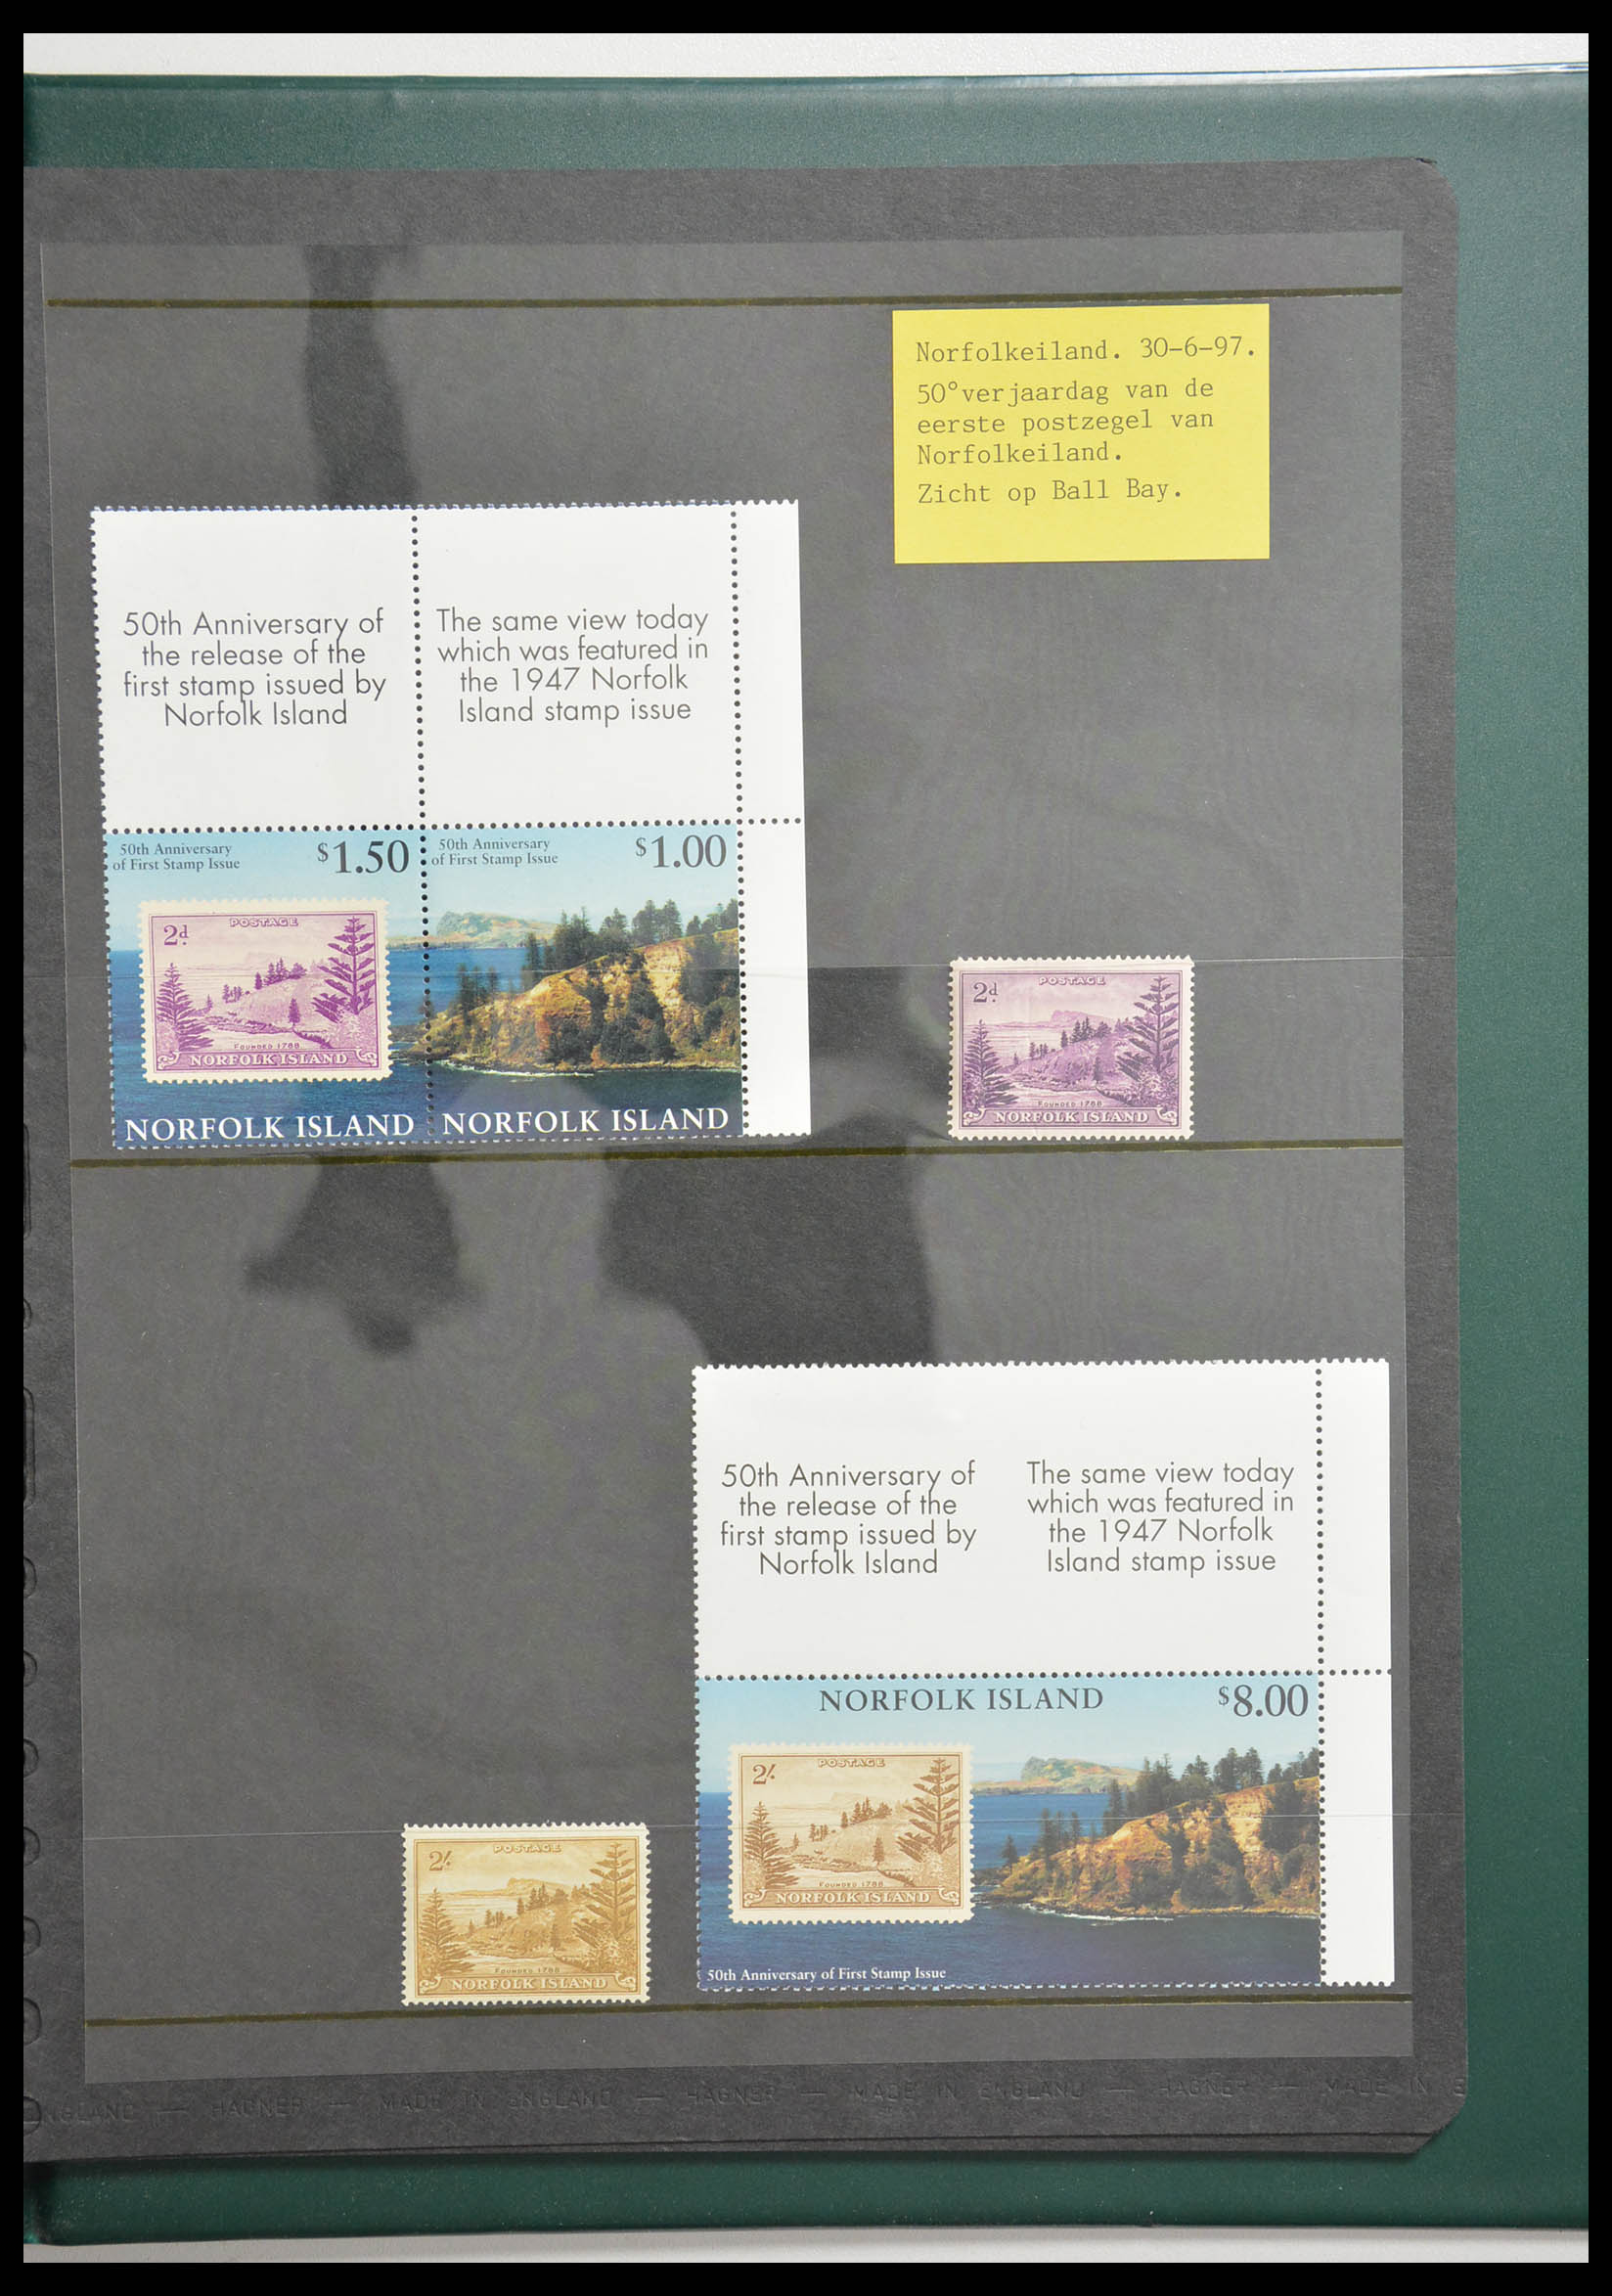 28337 089 - 28337 Stamp on stamp 1840-2001.